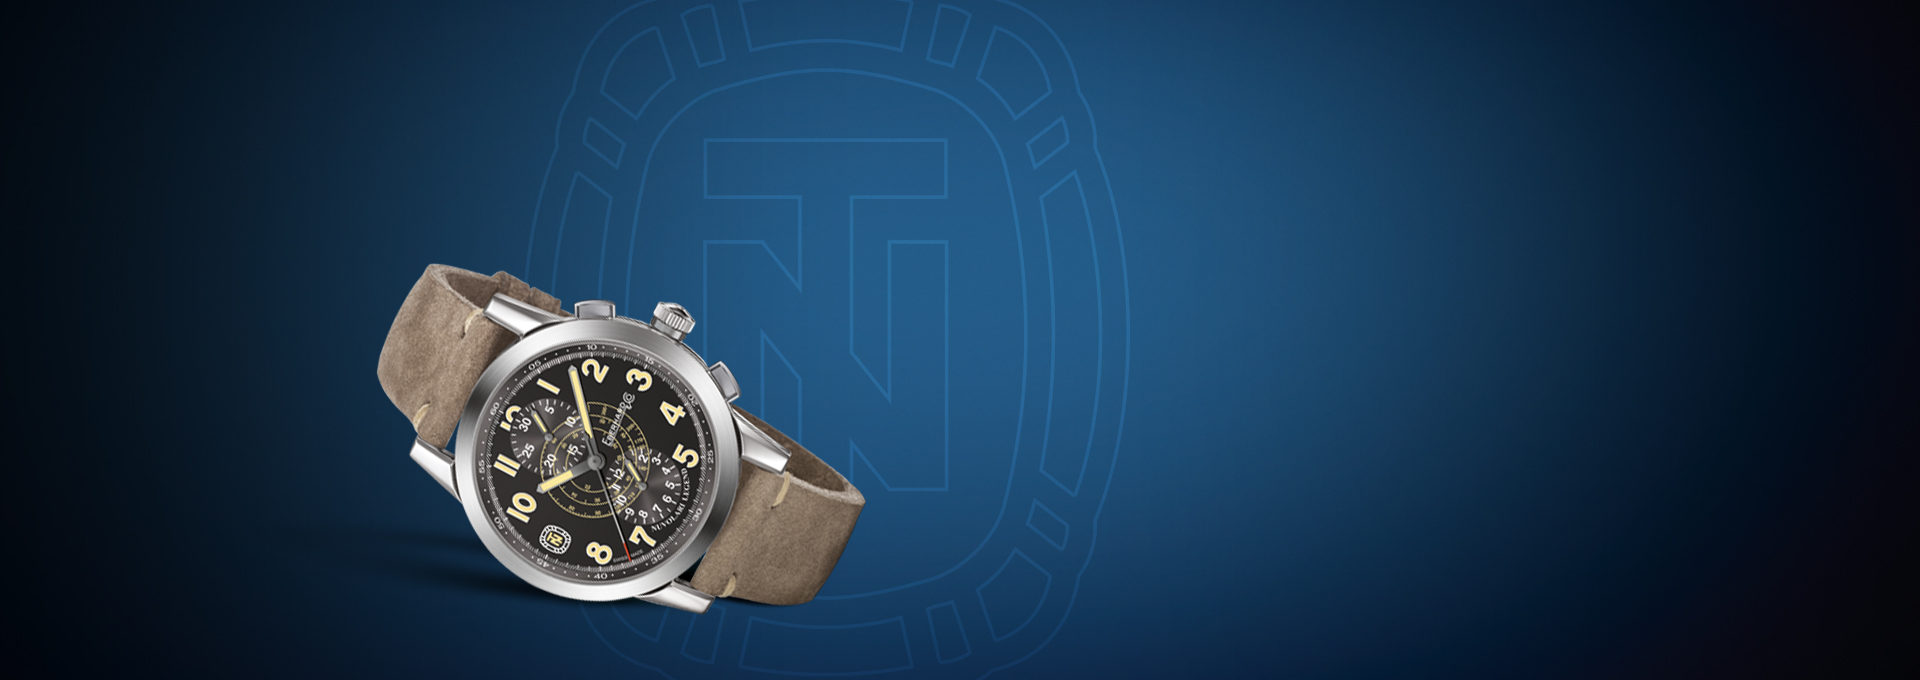 Replica Breitling Watches Bracelet